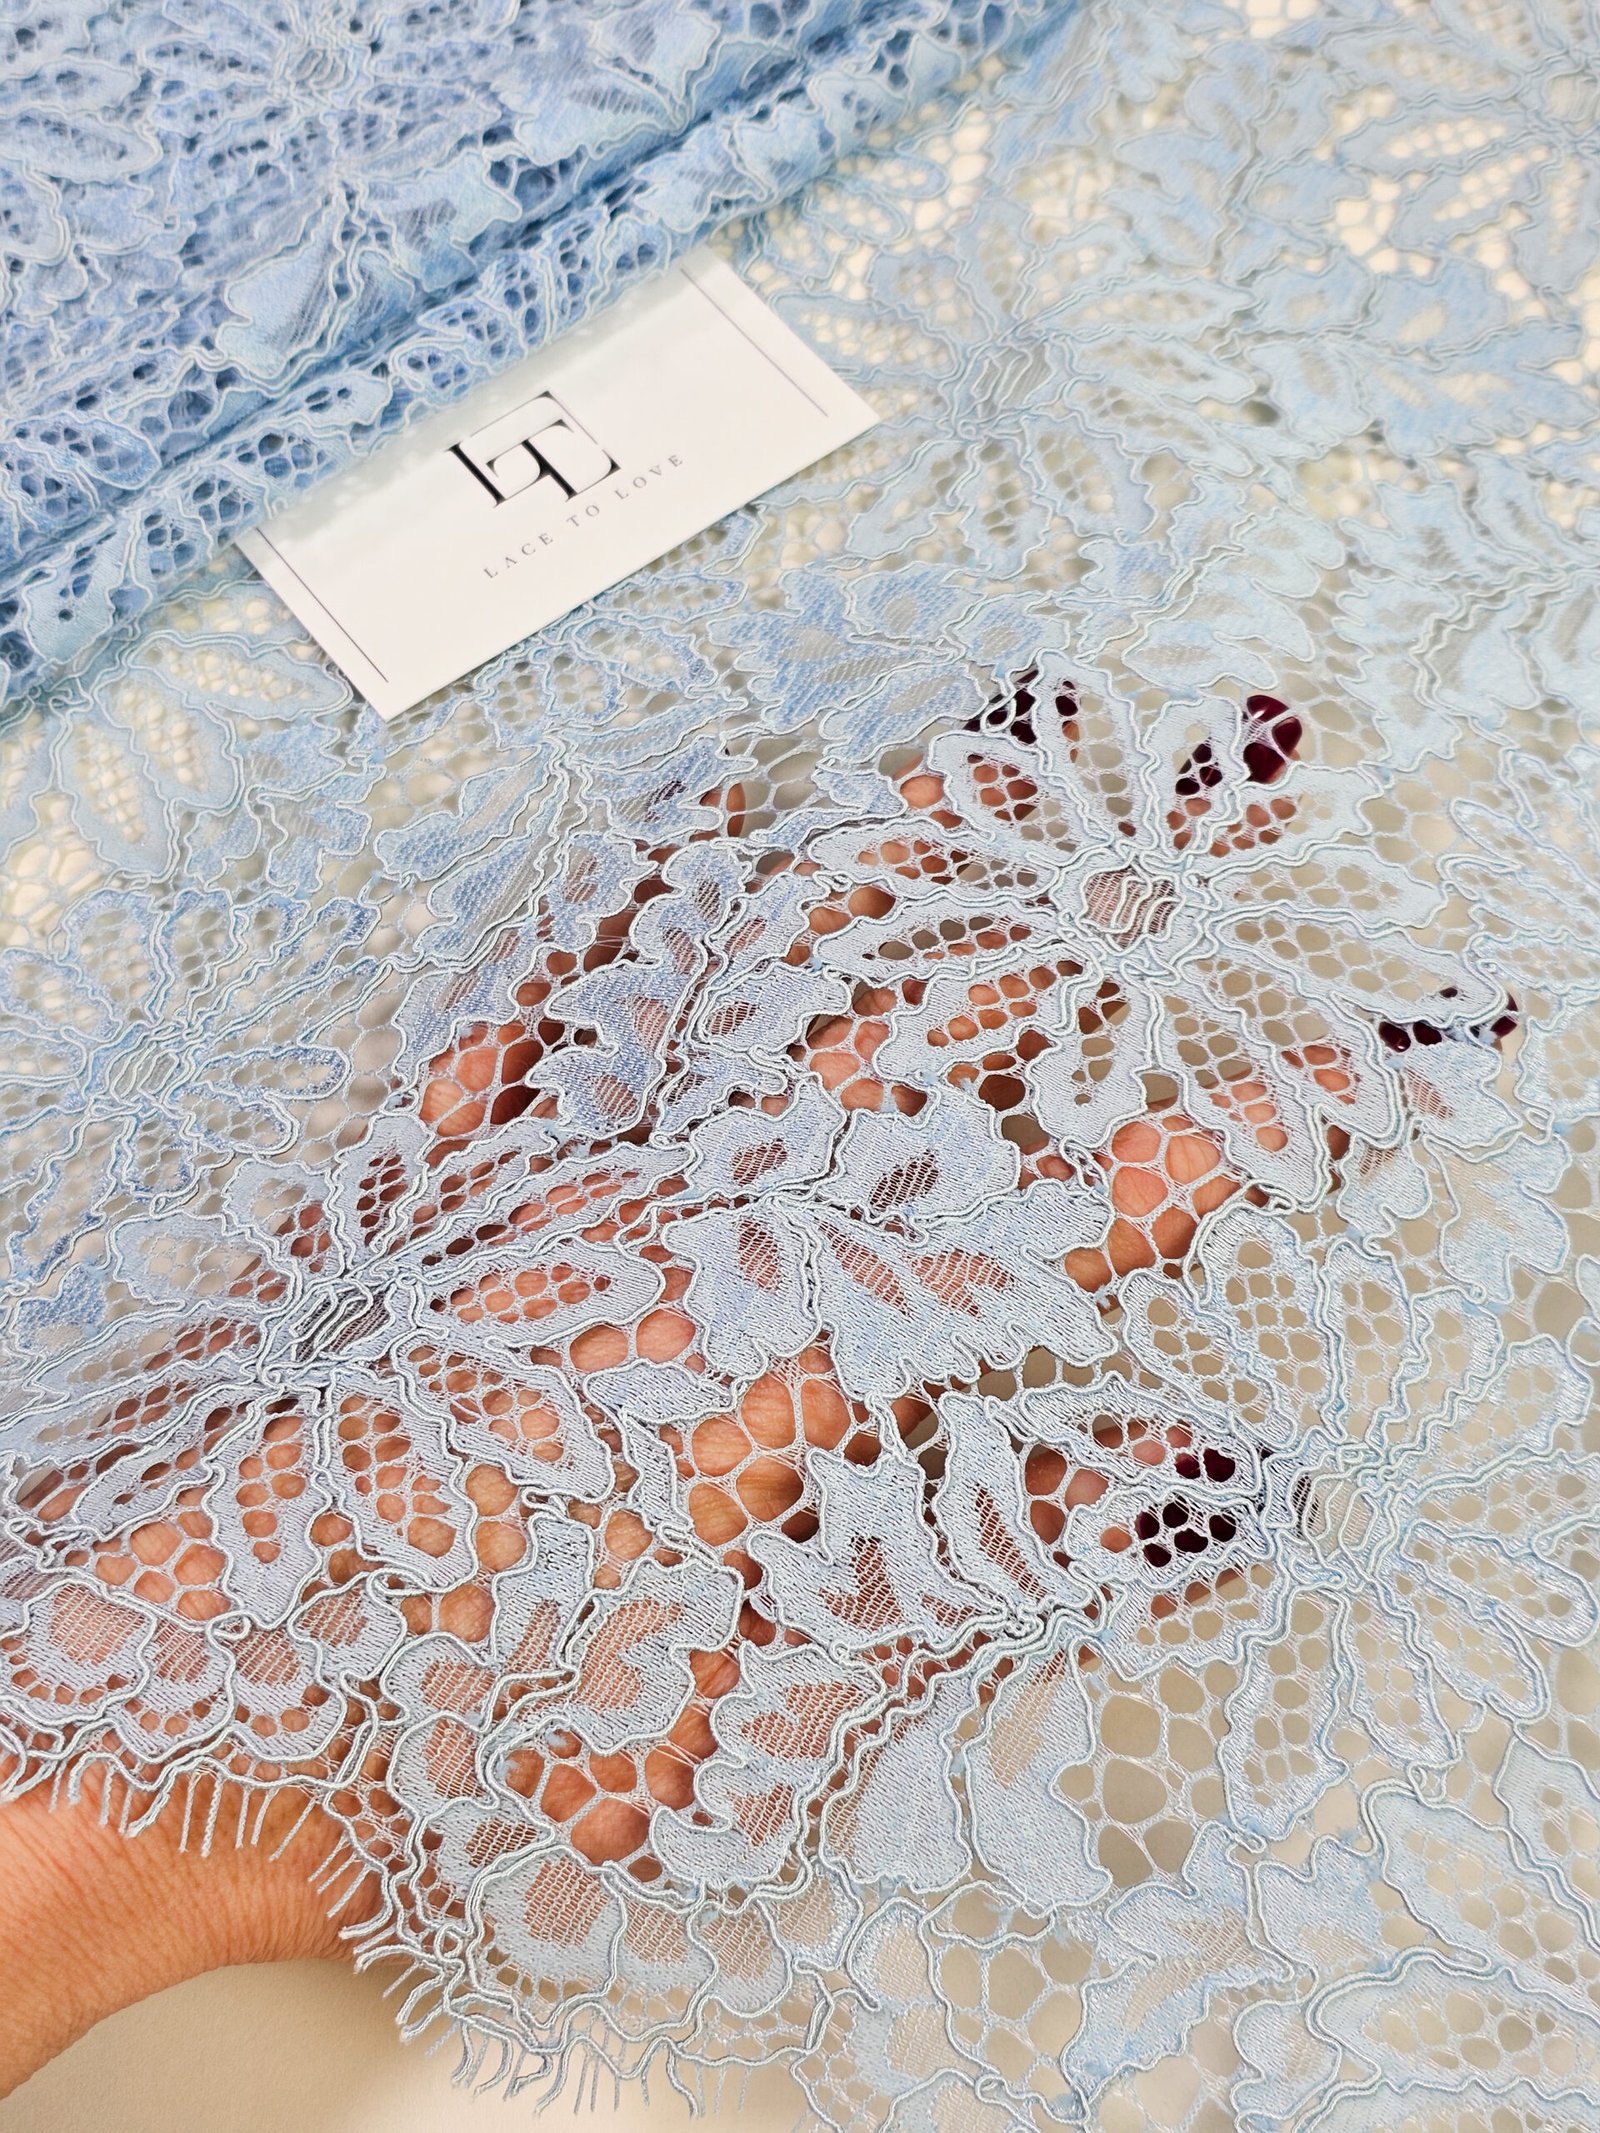 Heavy pale blue lace fabric